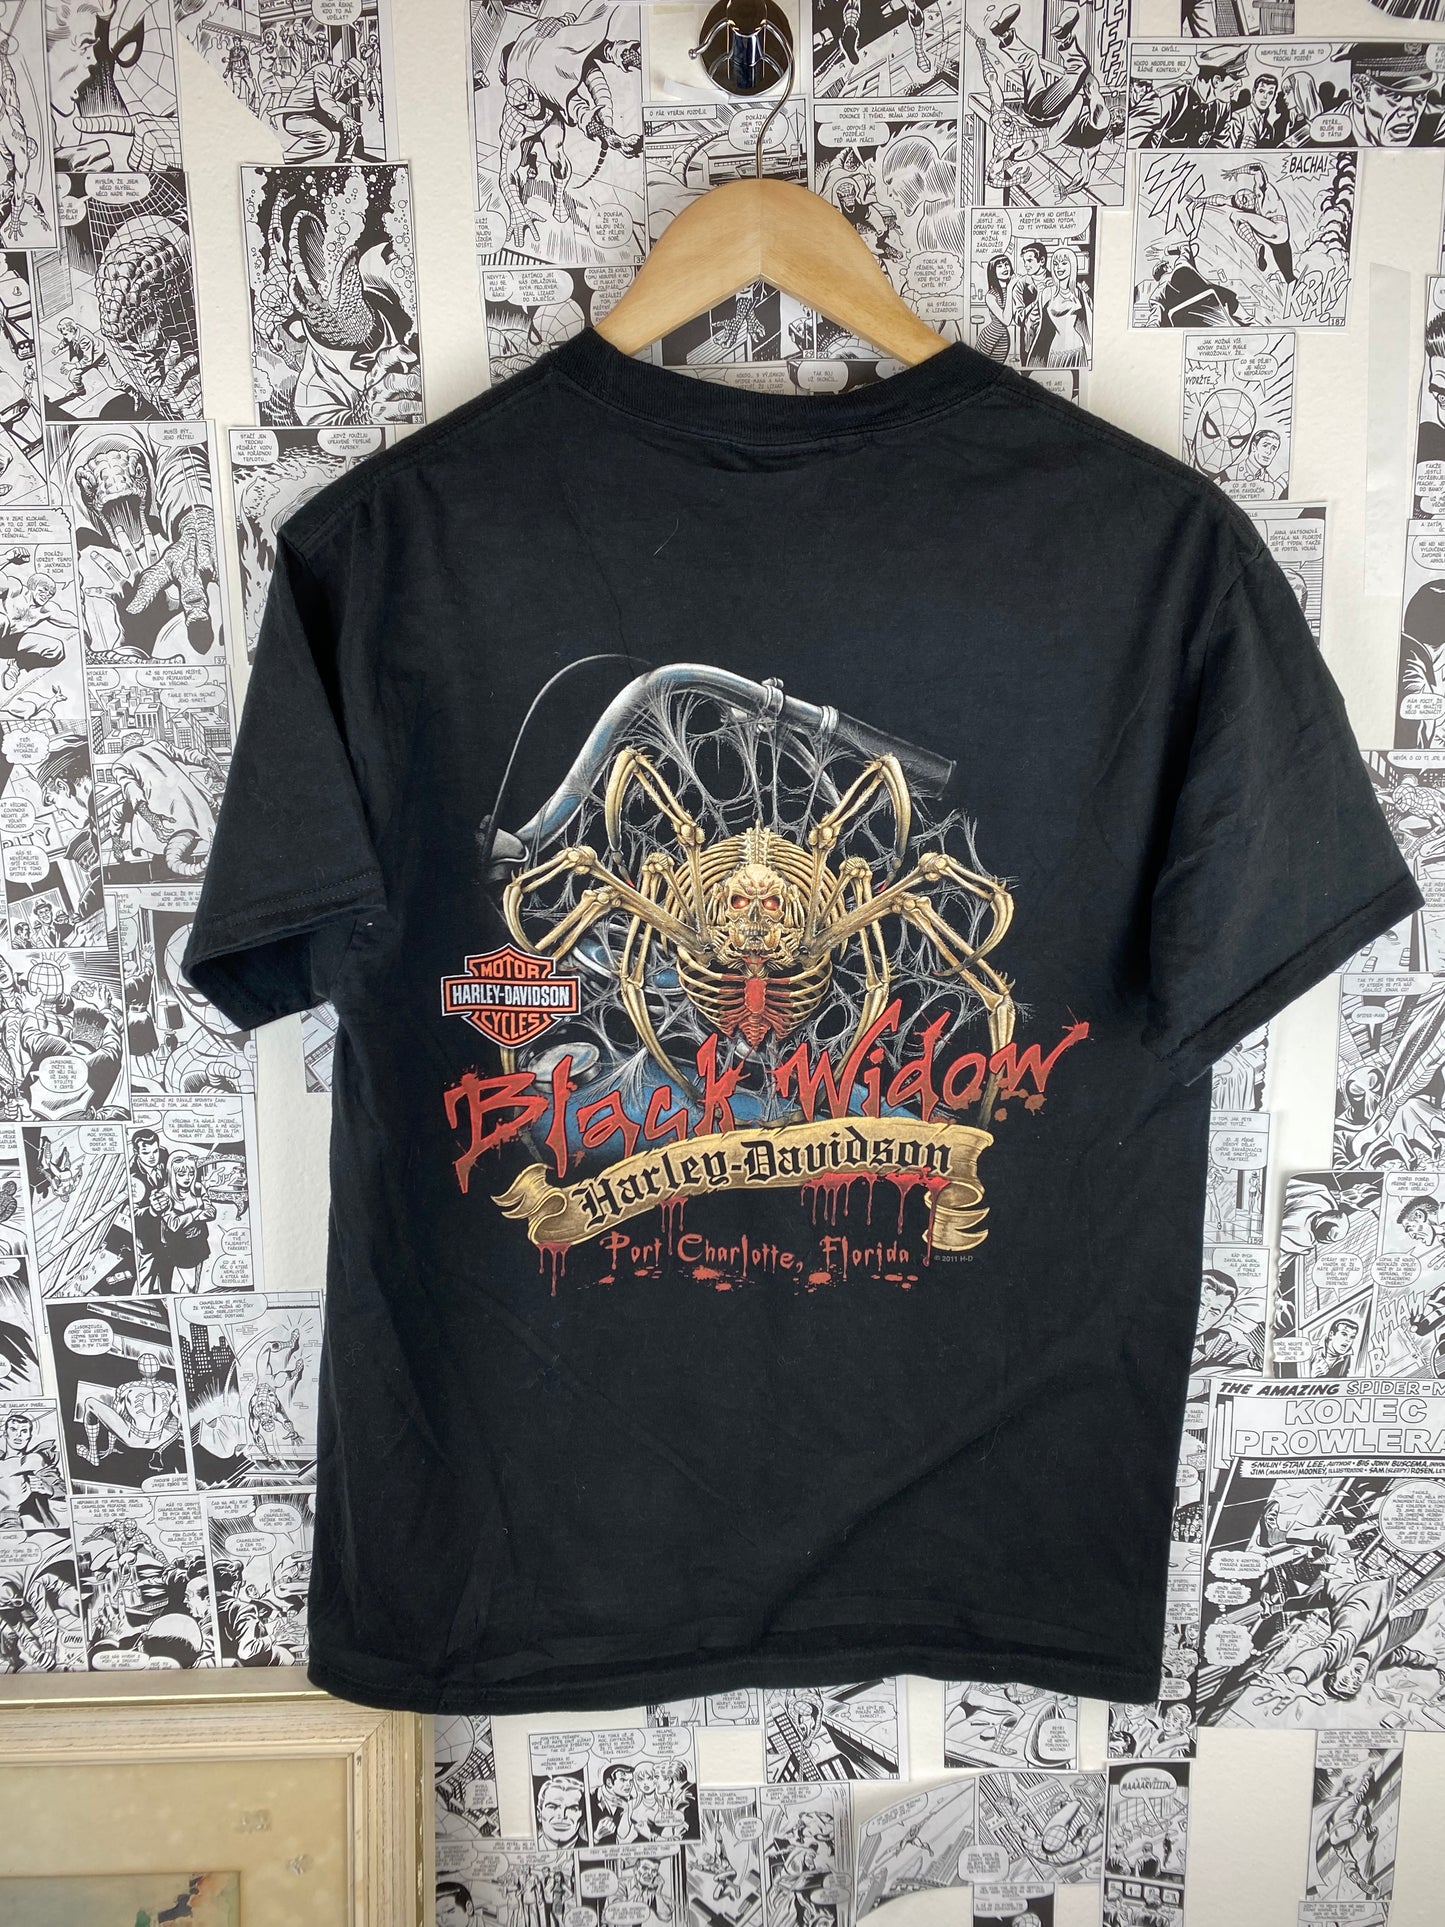 Vintage Harley Davidson “Black Widow” Florida t-shirt - size M